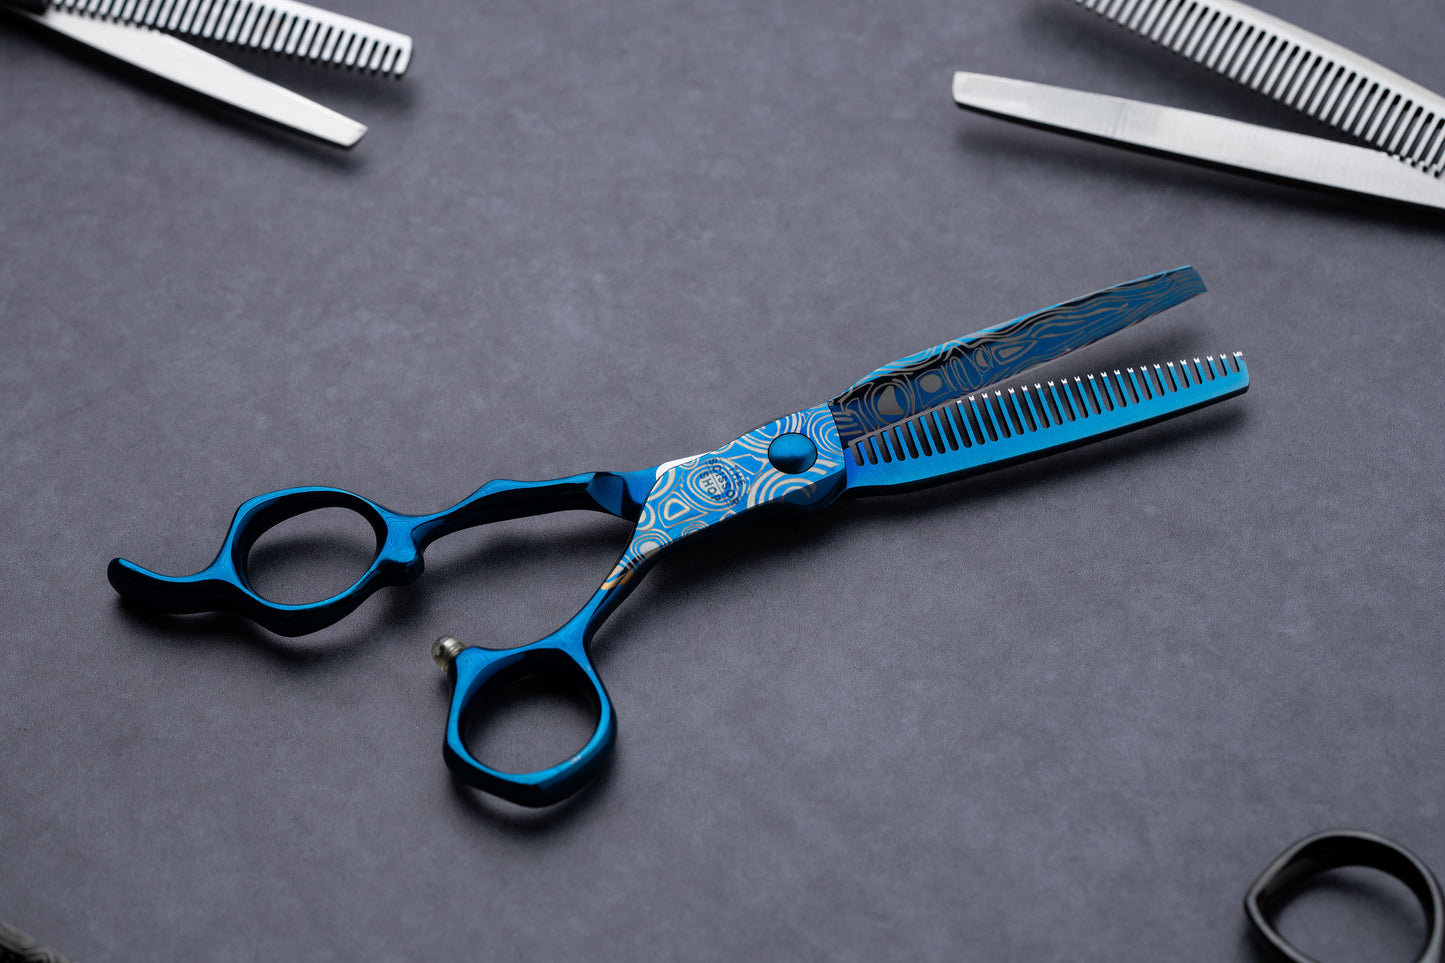 Aiiro Series 6" Japanese Steel Hairdressing Scissors